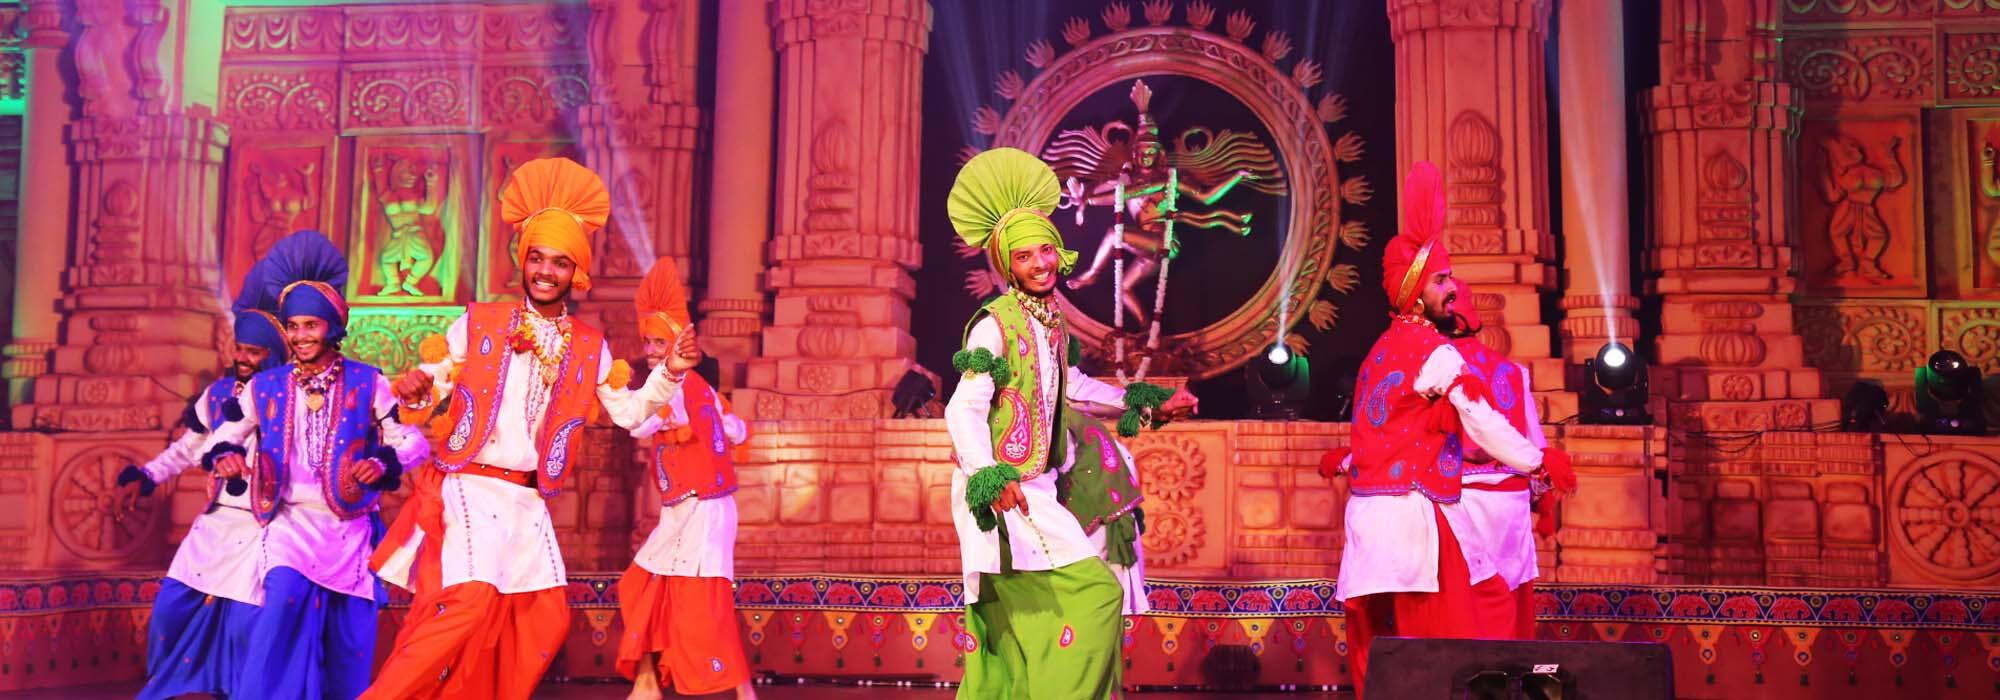 Bhangra, a folk dance of Punjab